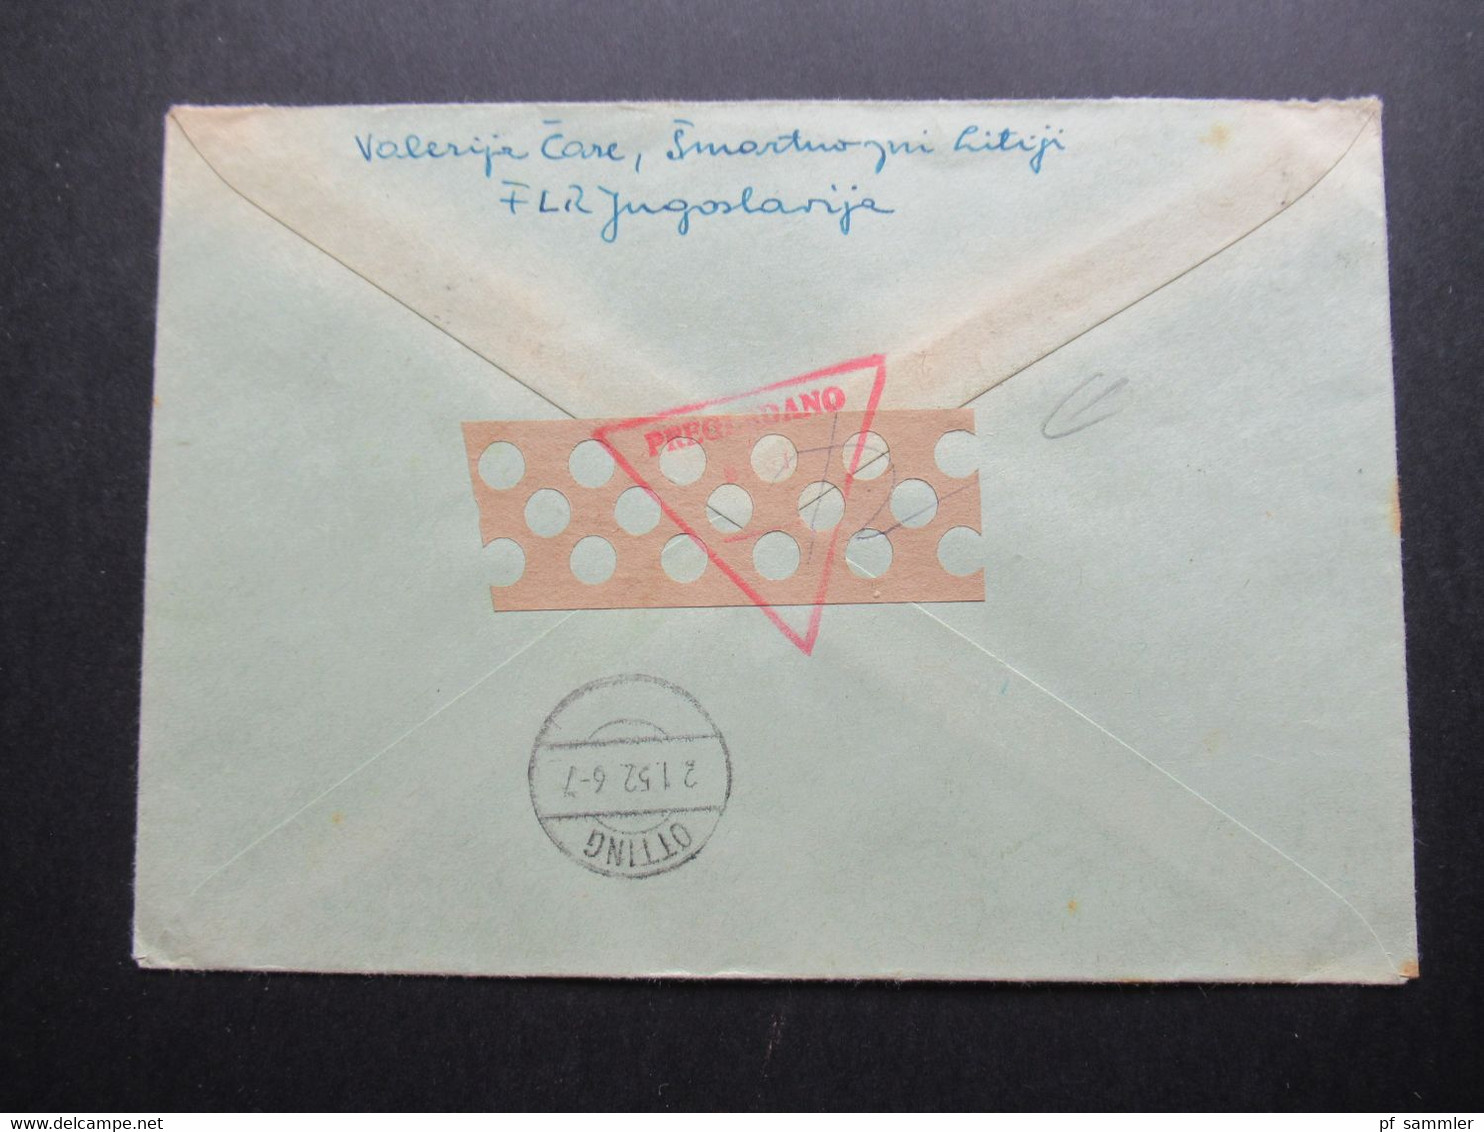 Jugoslawien 1951 Flugzeuge über Landschaften Nr.649/650 Einschreiben Beograd 1 Nach Otting Roter Dreieck Zensurstempel - Cartas & Documentos